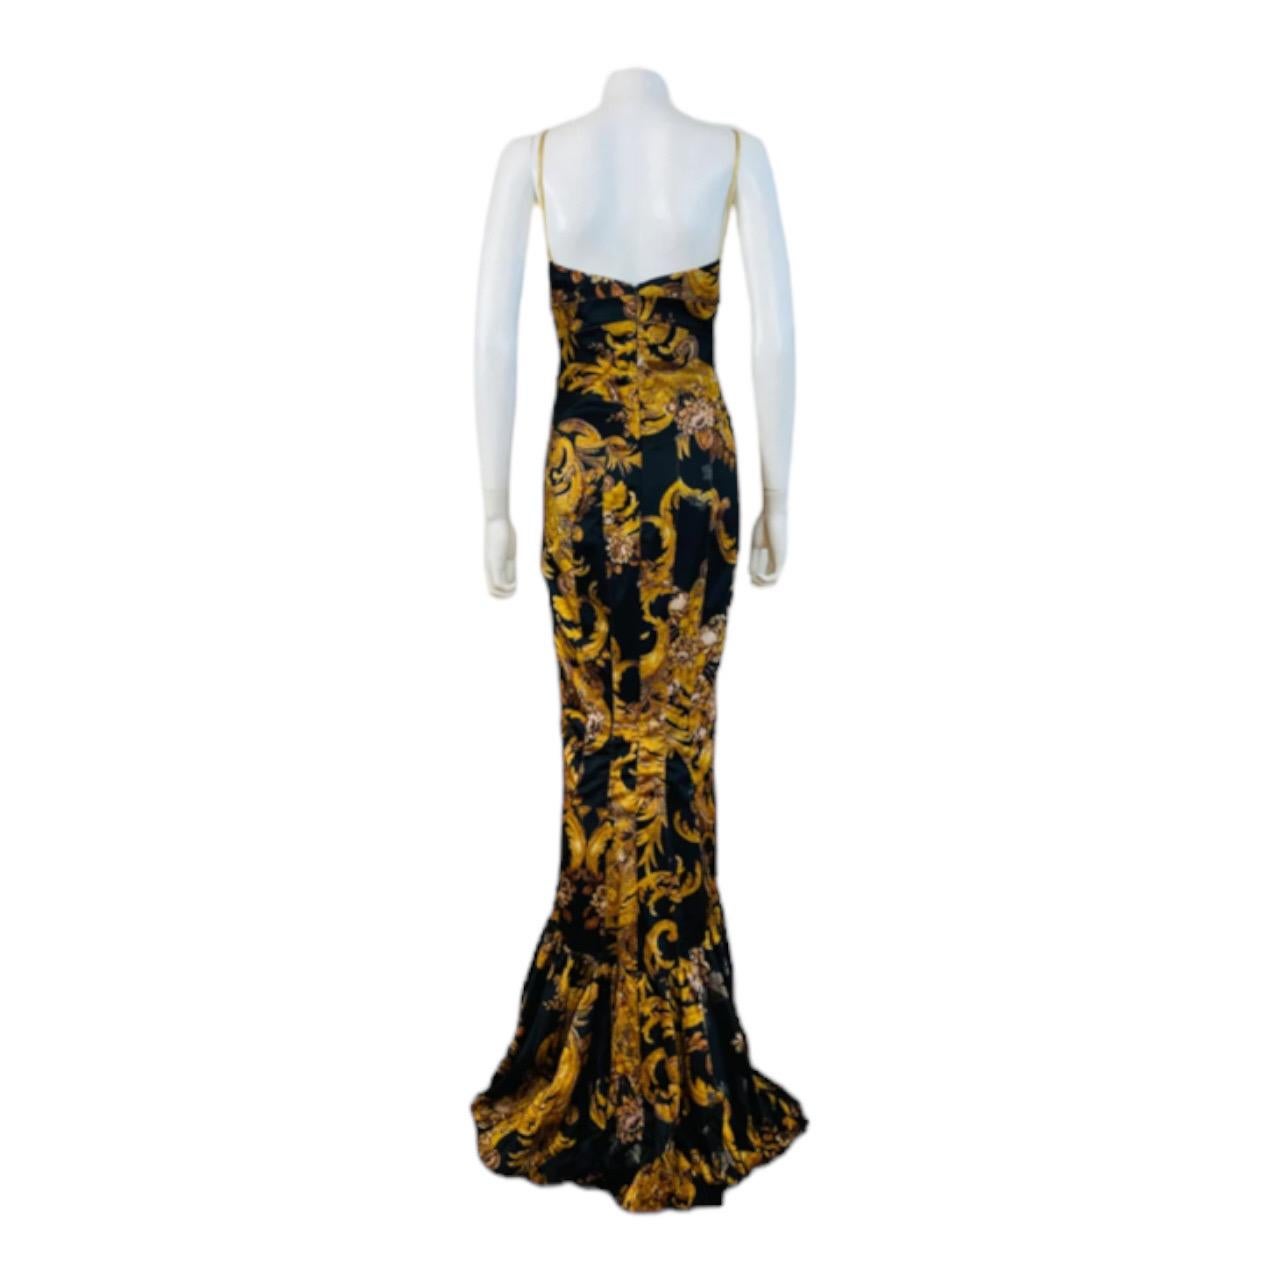 Vintage 2000s Y2K Just Cavalli Roberto Cavalli Black Gold Baroque Dress Gown For Sale 2